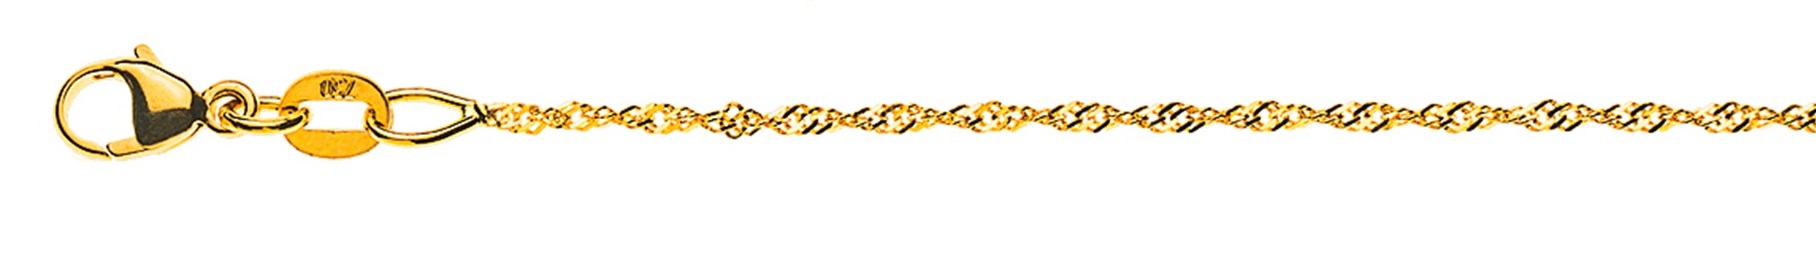 AURONOS Style Necklace Yellow Gold 9K Singapore Chain 38cm 1.2mm